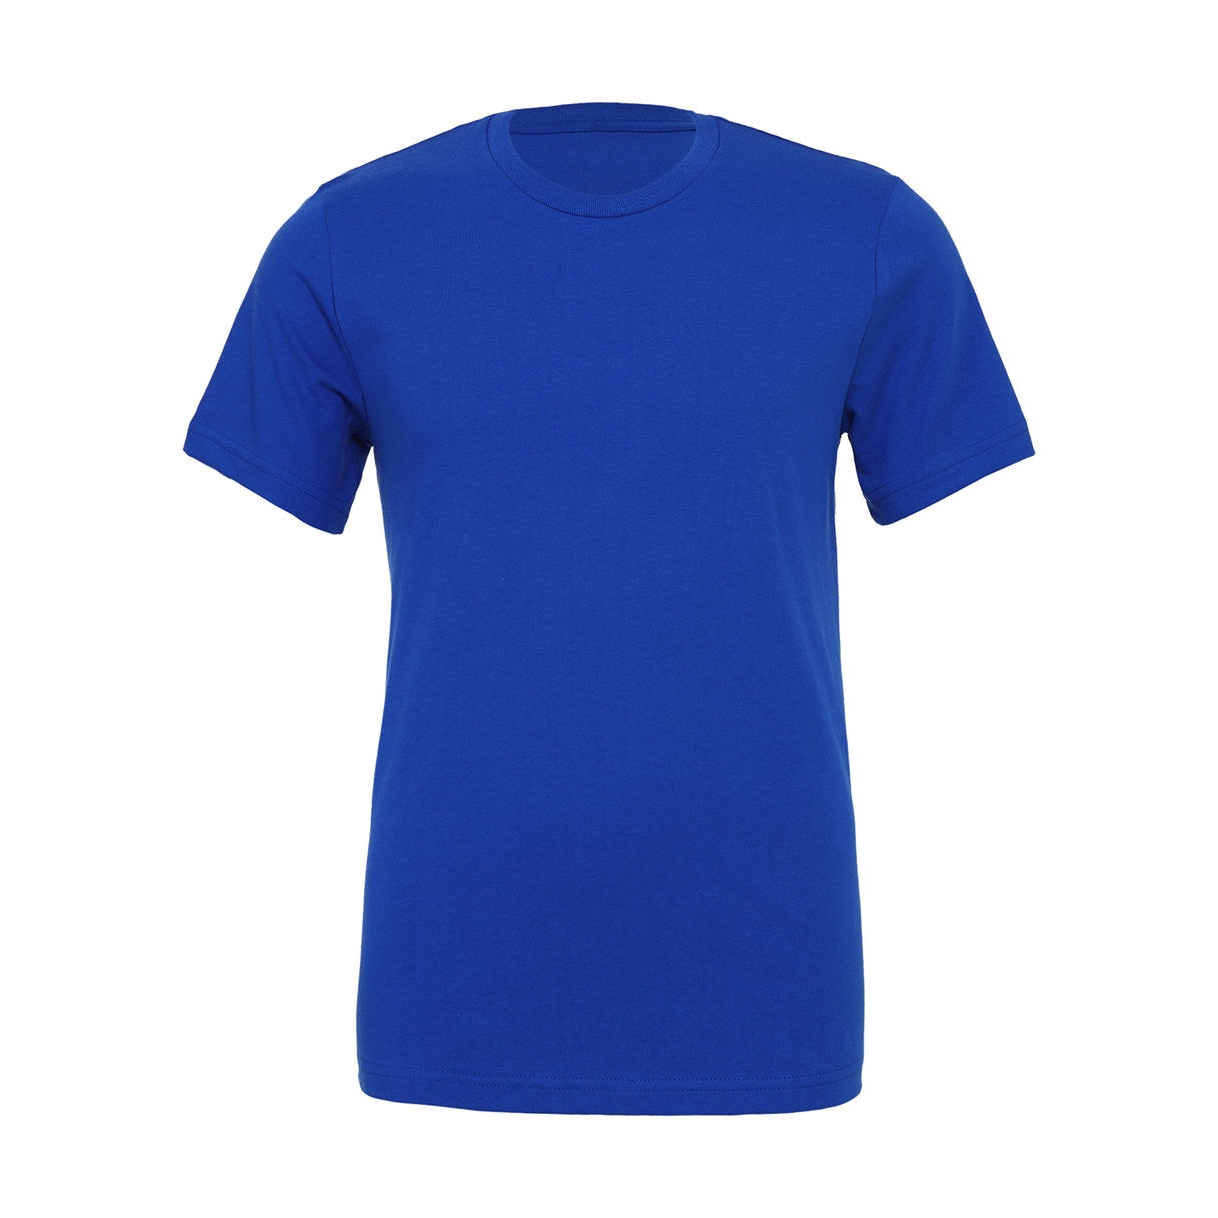 Tričko Bella Jersey - modré, XS